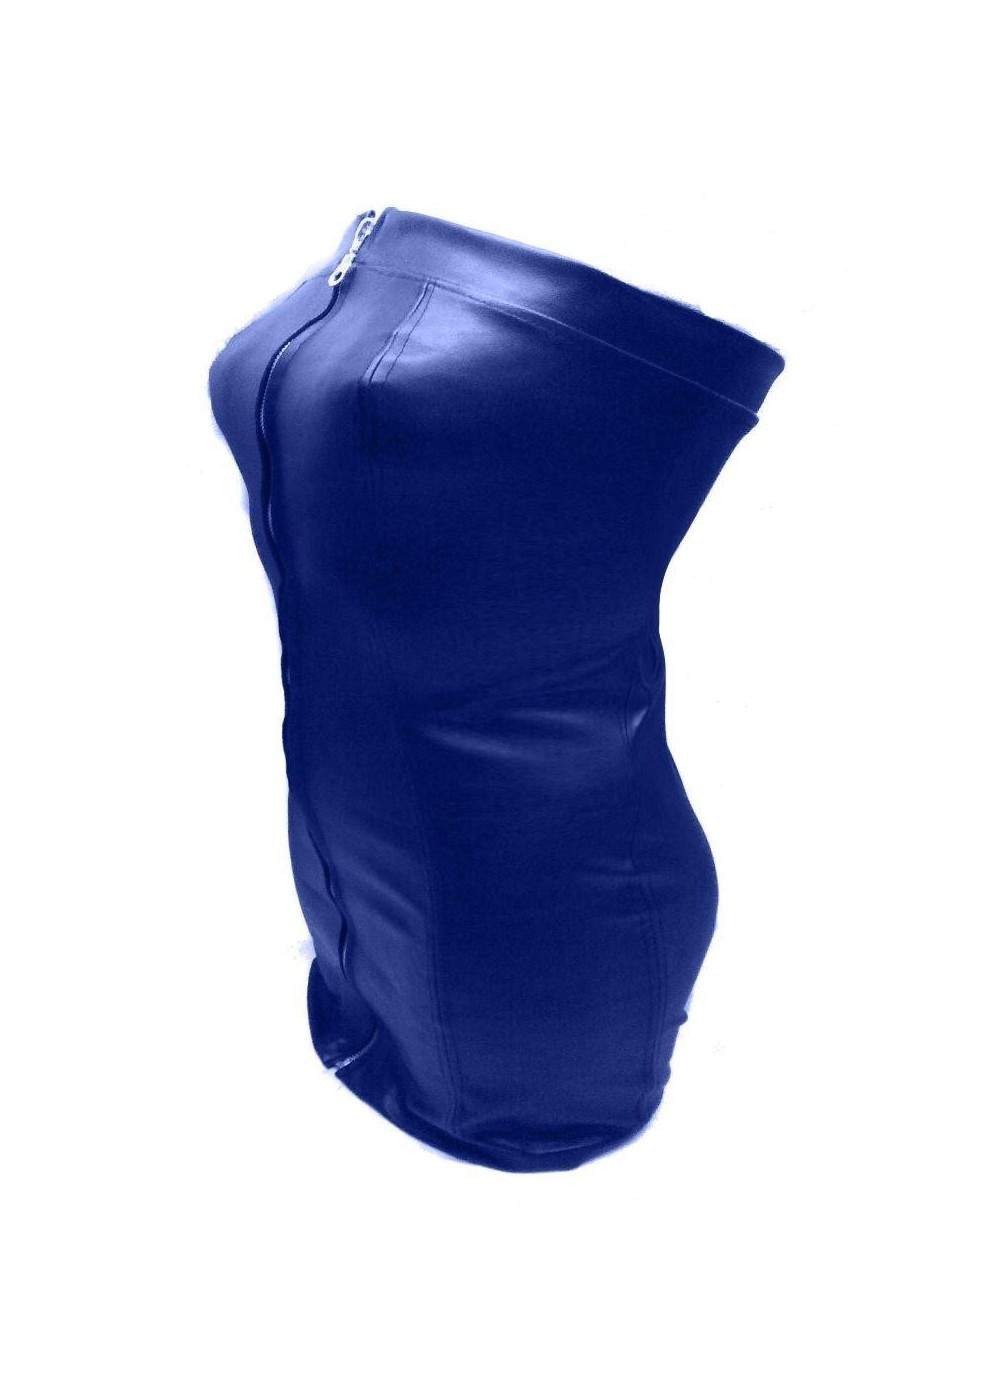 Designer leather dress blue size L - XXL (44 - 52) 42,35 € - 